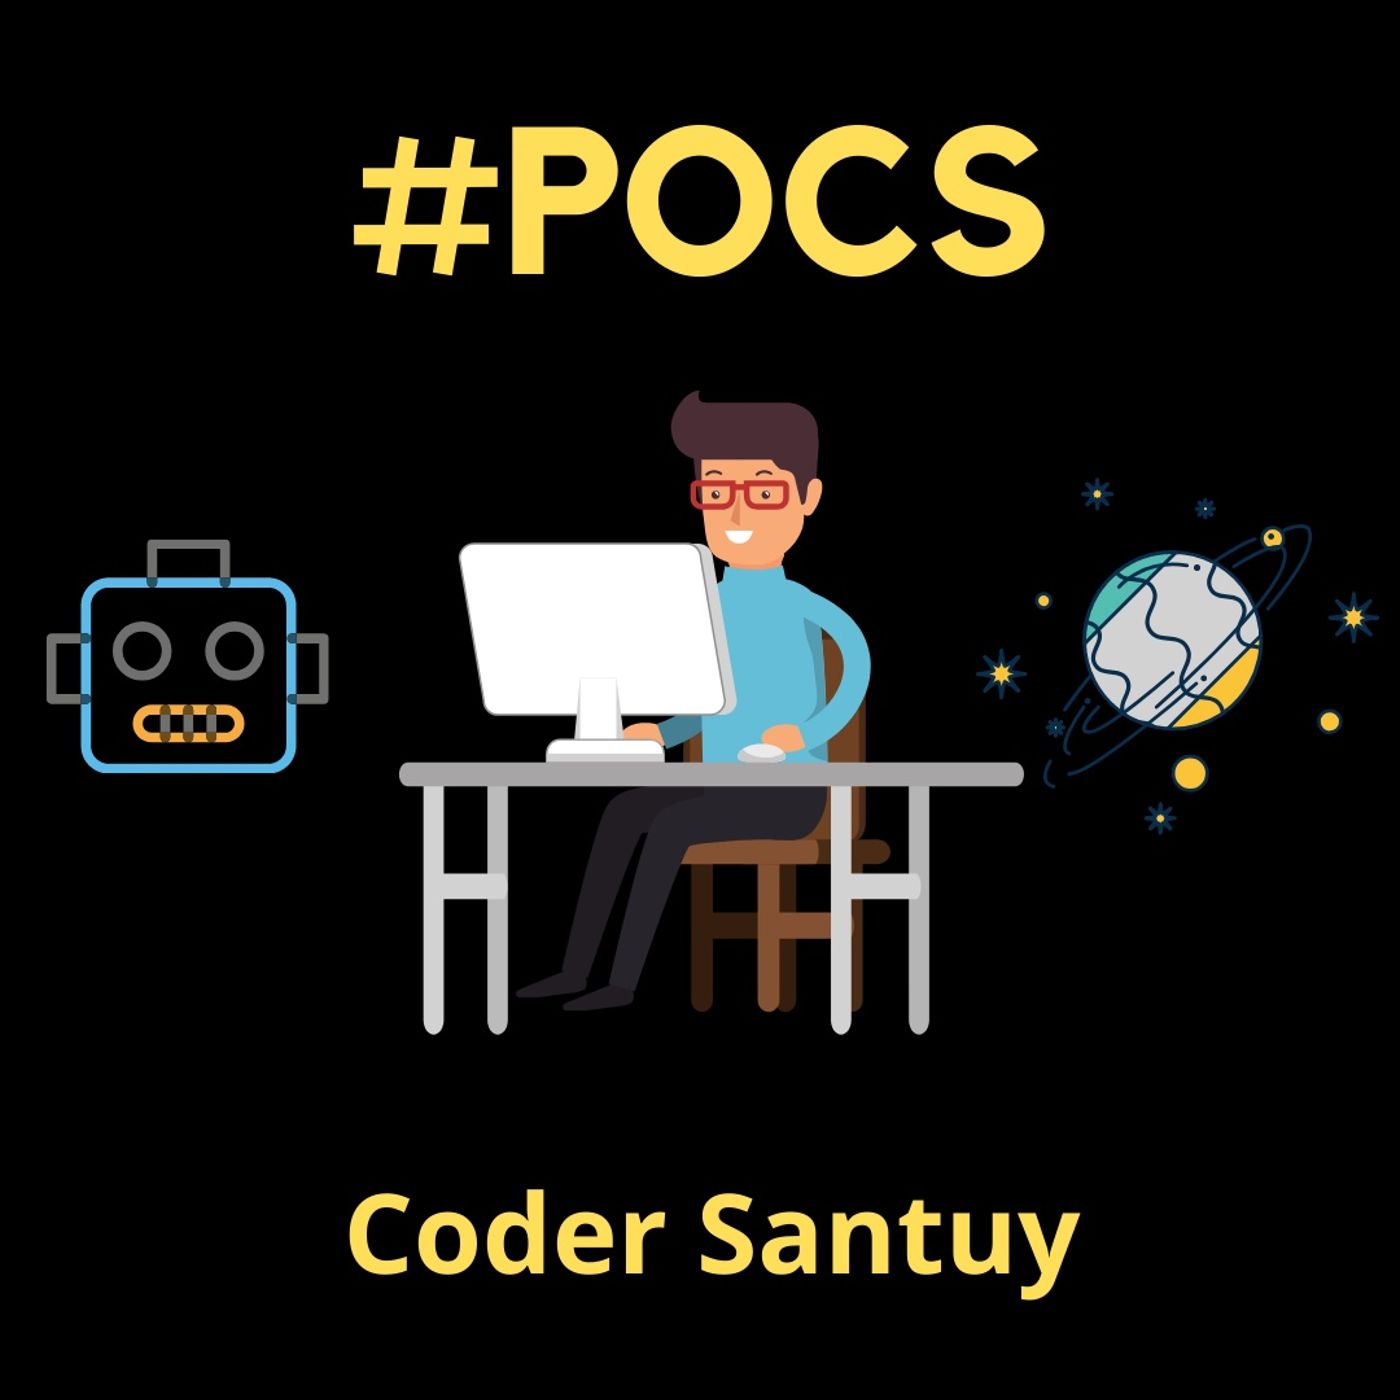 POCS - Coder Santuy